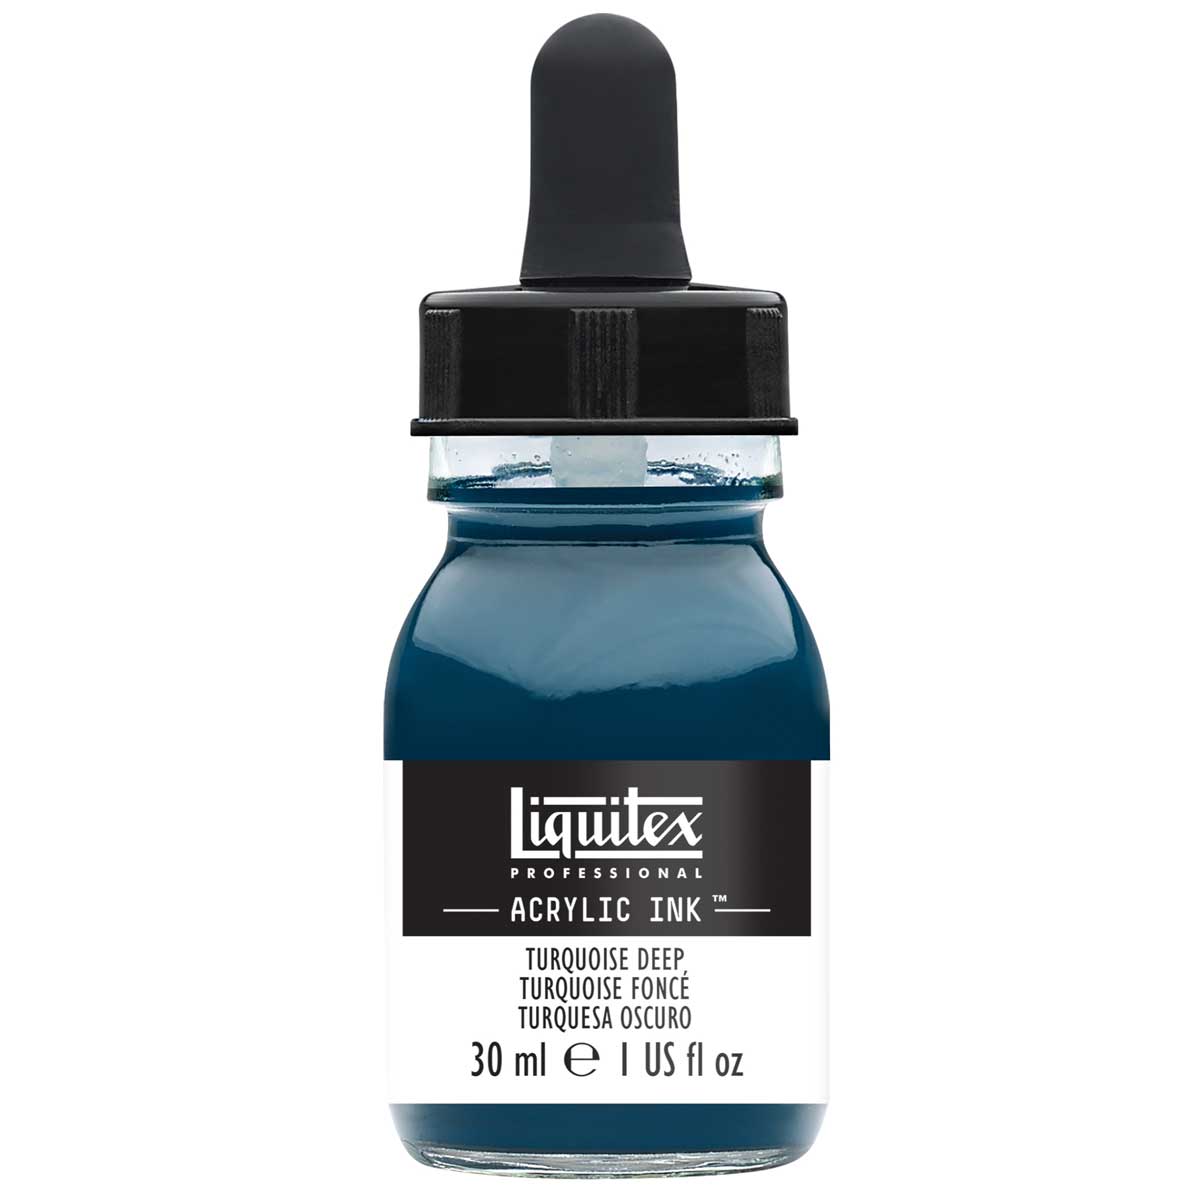 Liquitex Professional Acrylic Ink - Turquoise Deep 30ml/1oz